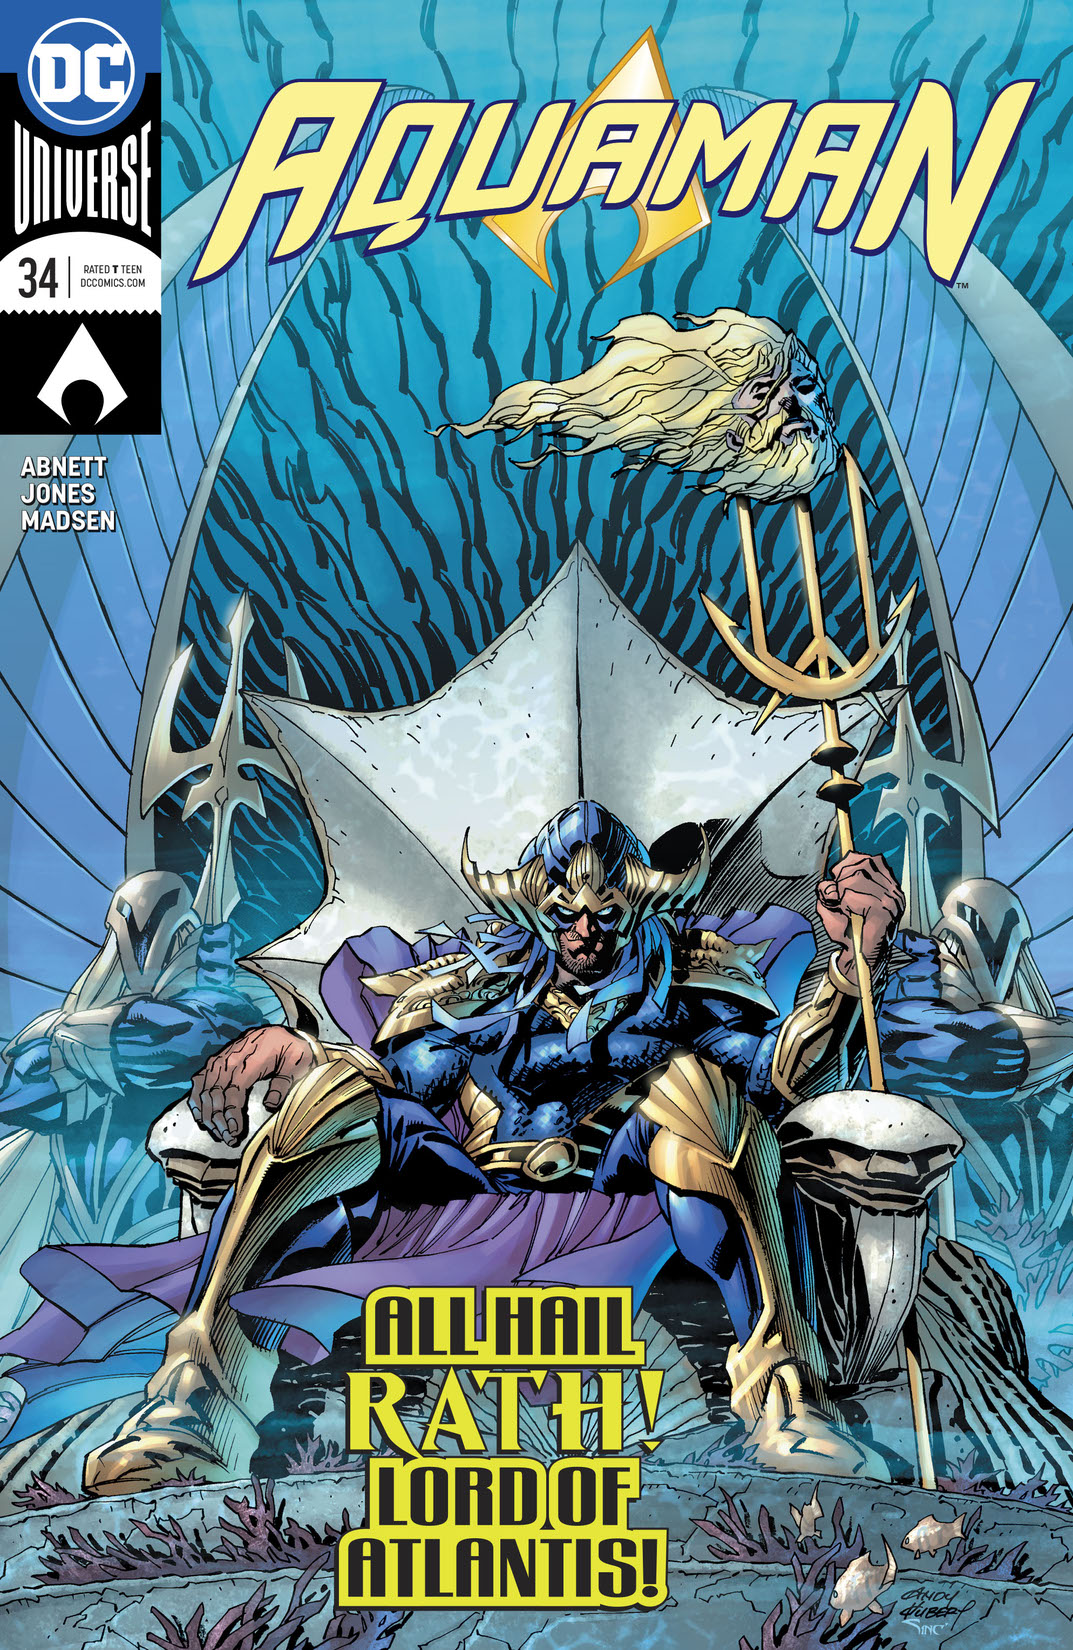 Aquaman (2016-) #34 preview images